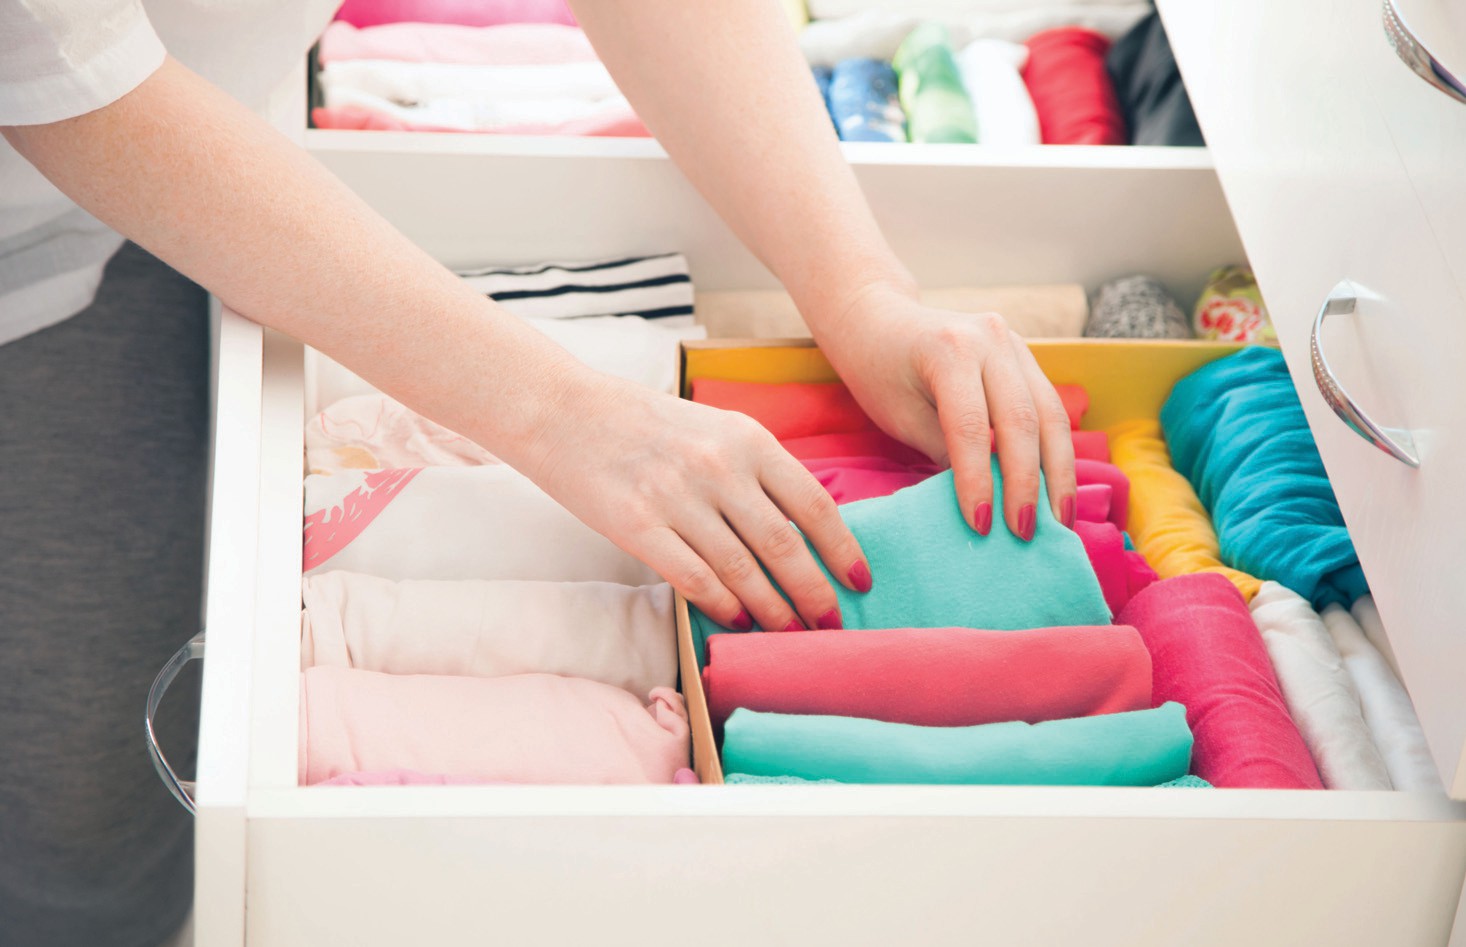 ClutterBug Quiz Folding clothes dresser drawer